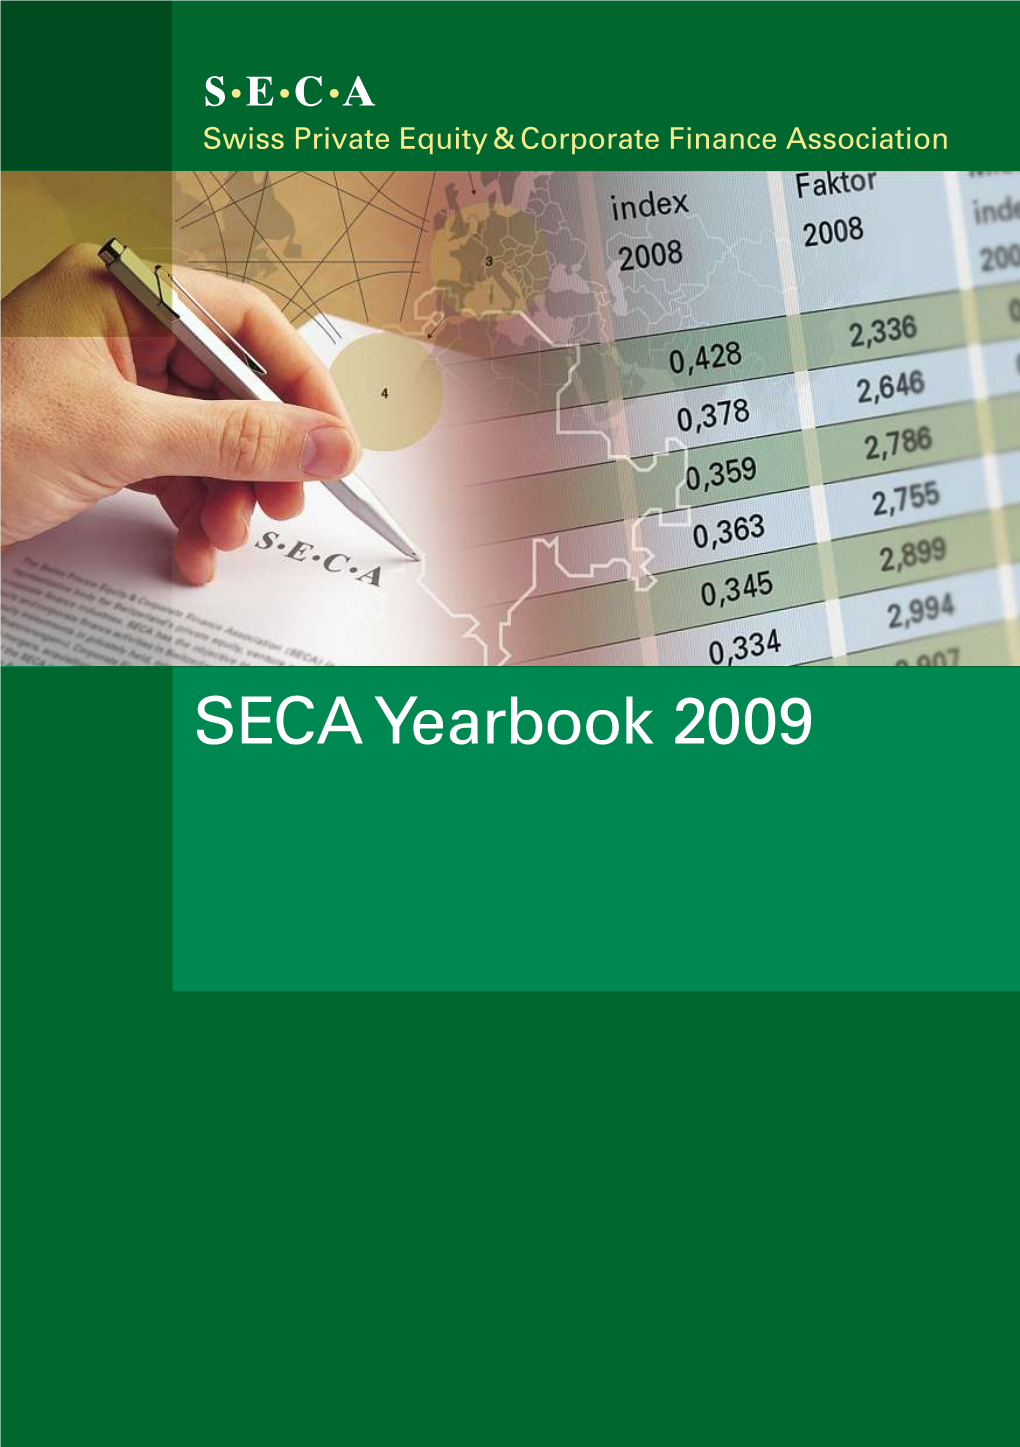 SECA Yearbook 2009 C • E • S 630 4 Z U G P O St F Ac H4 G R a Fen Uw Eg SECA 332 1 0